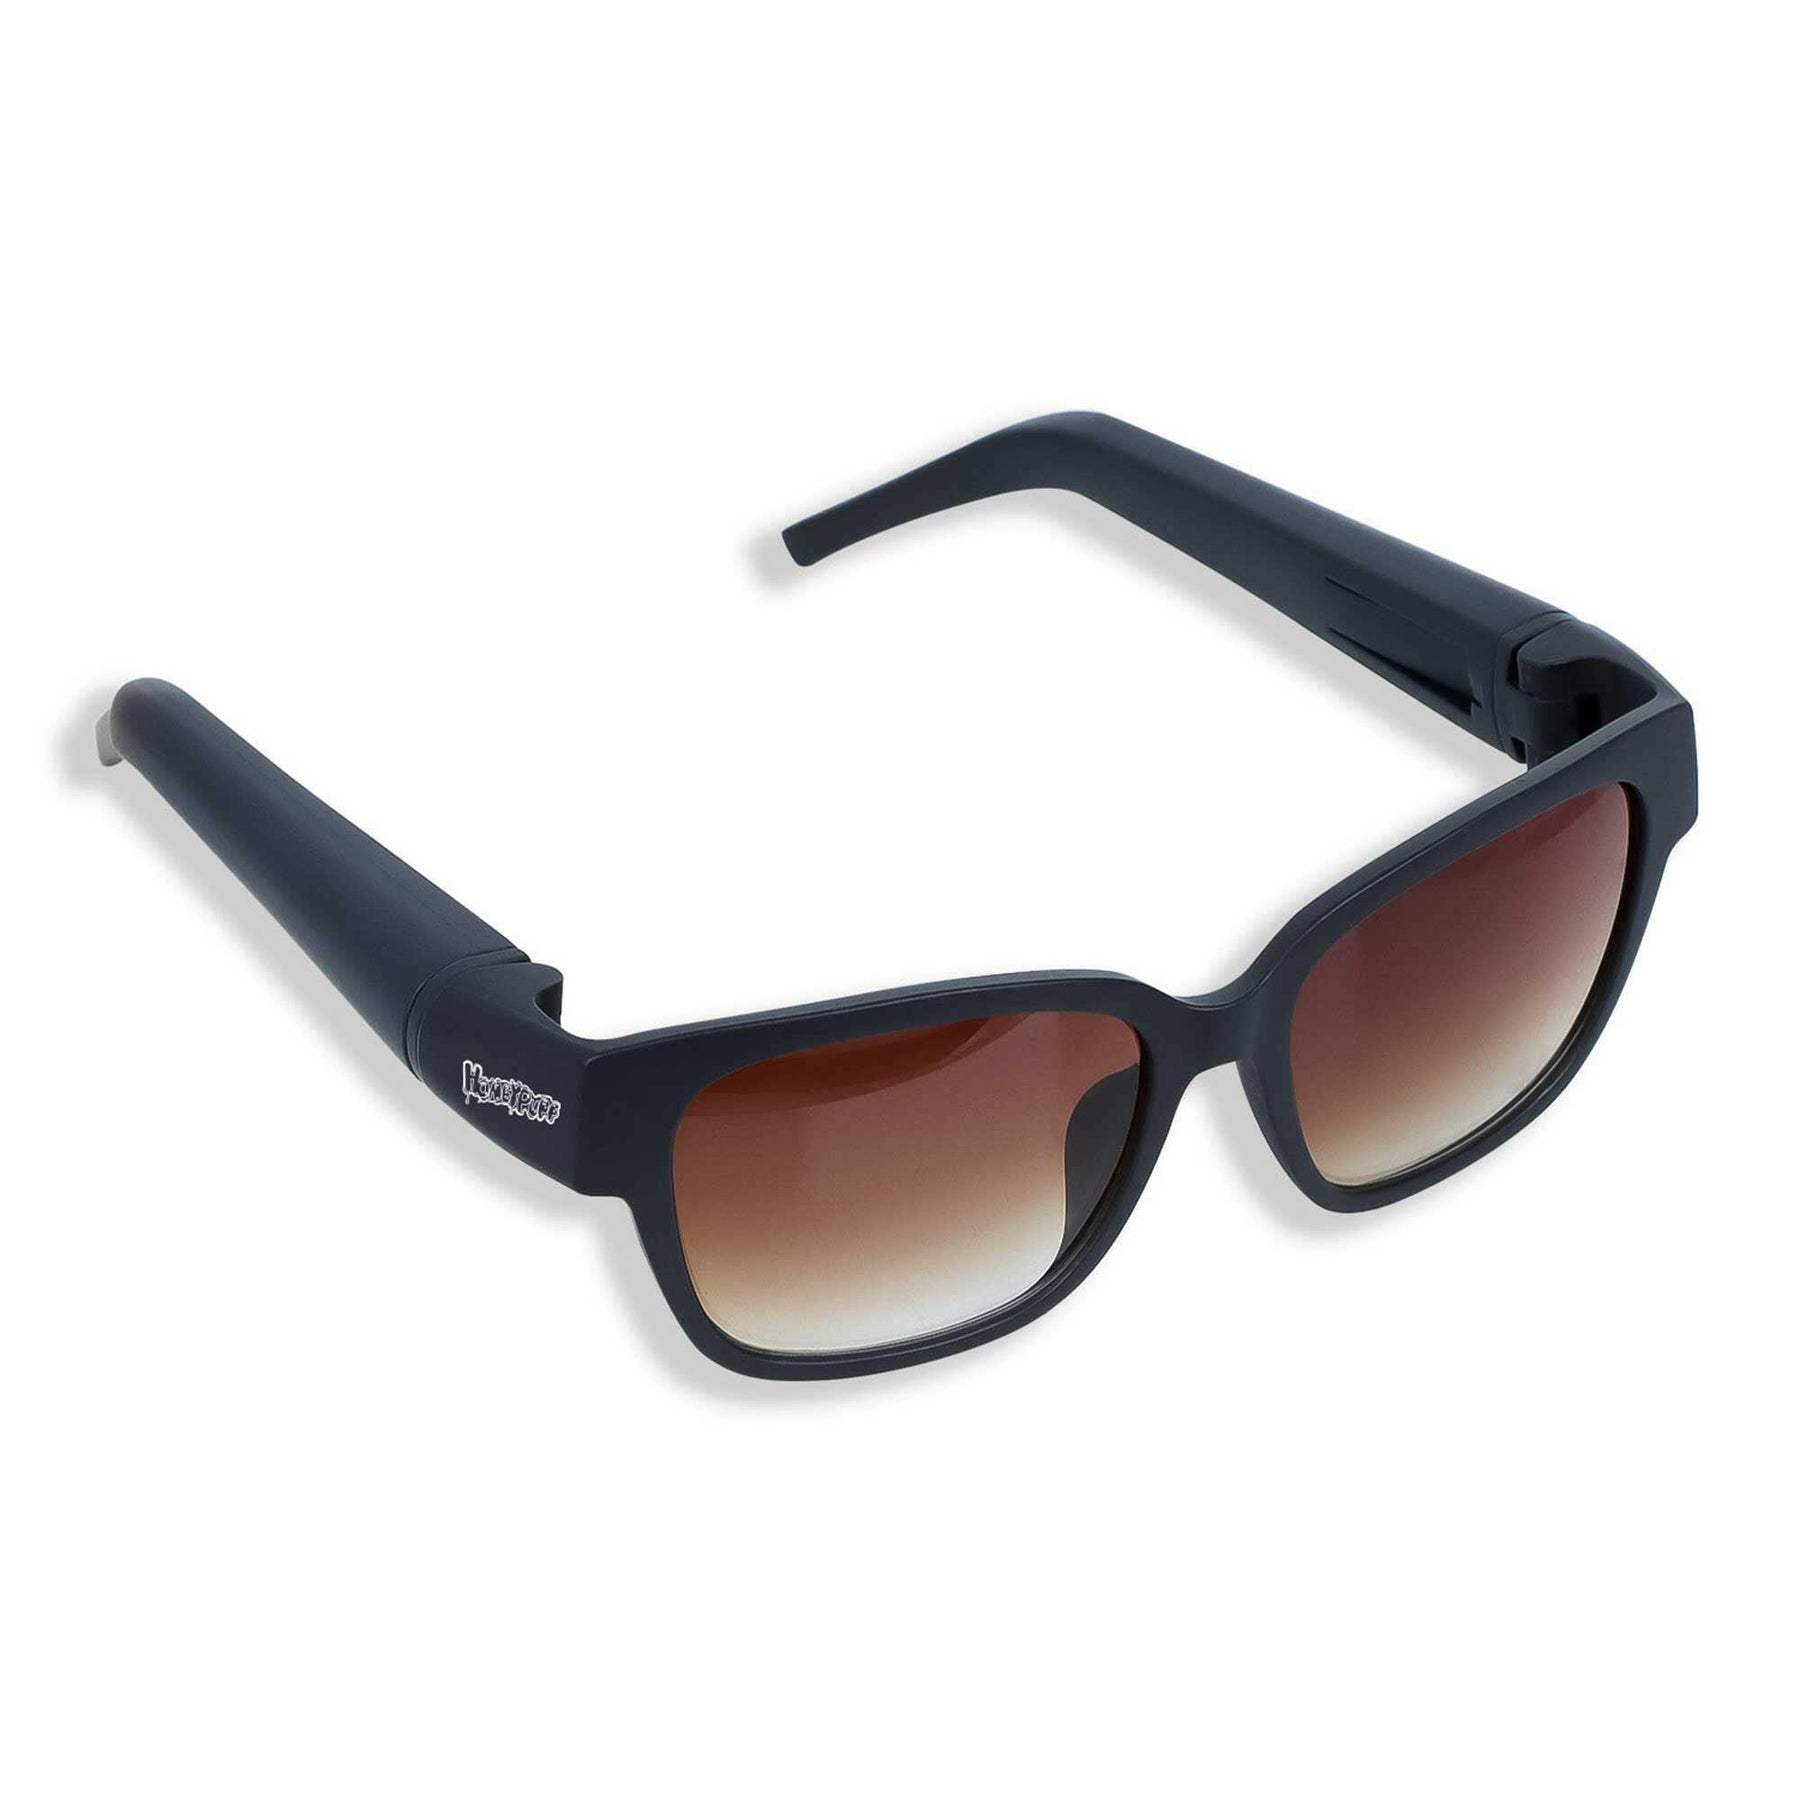 Black Sunglasses with Hidden Storage